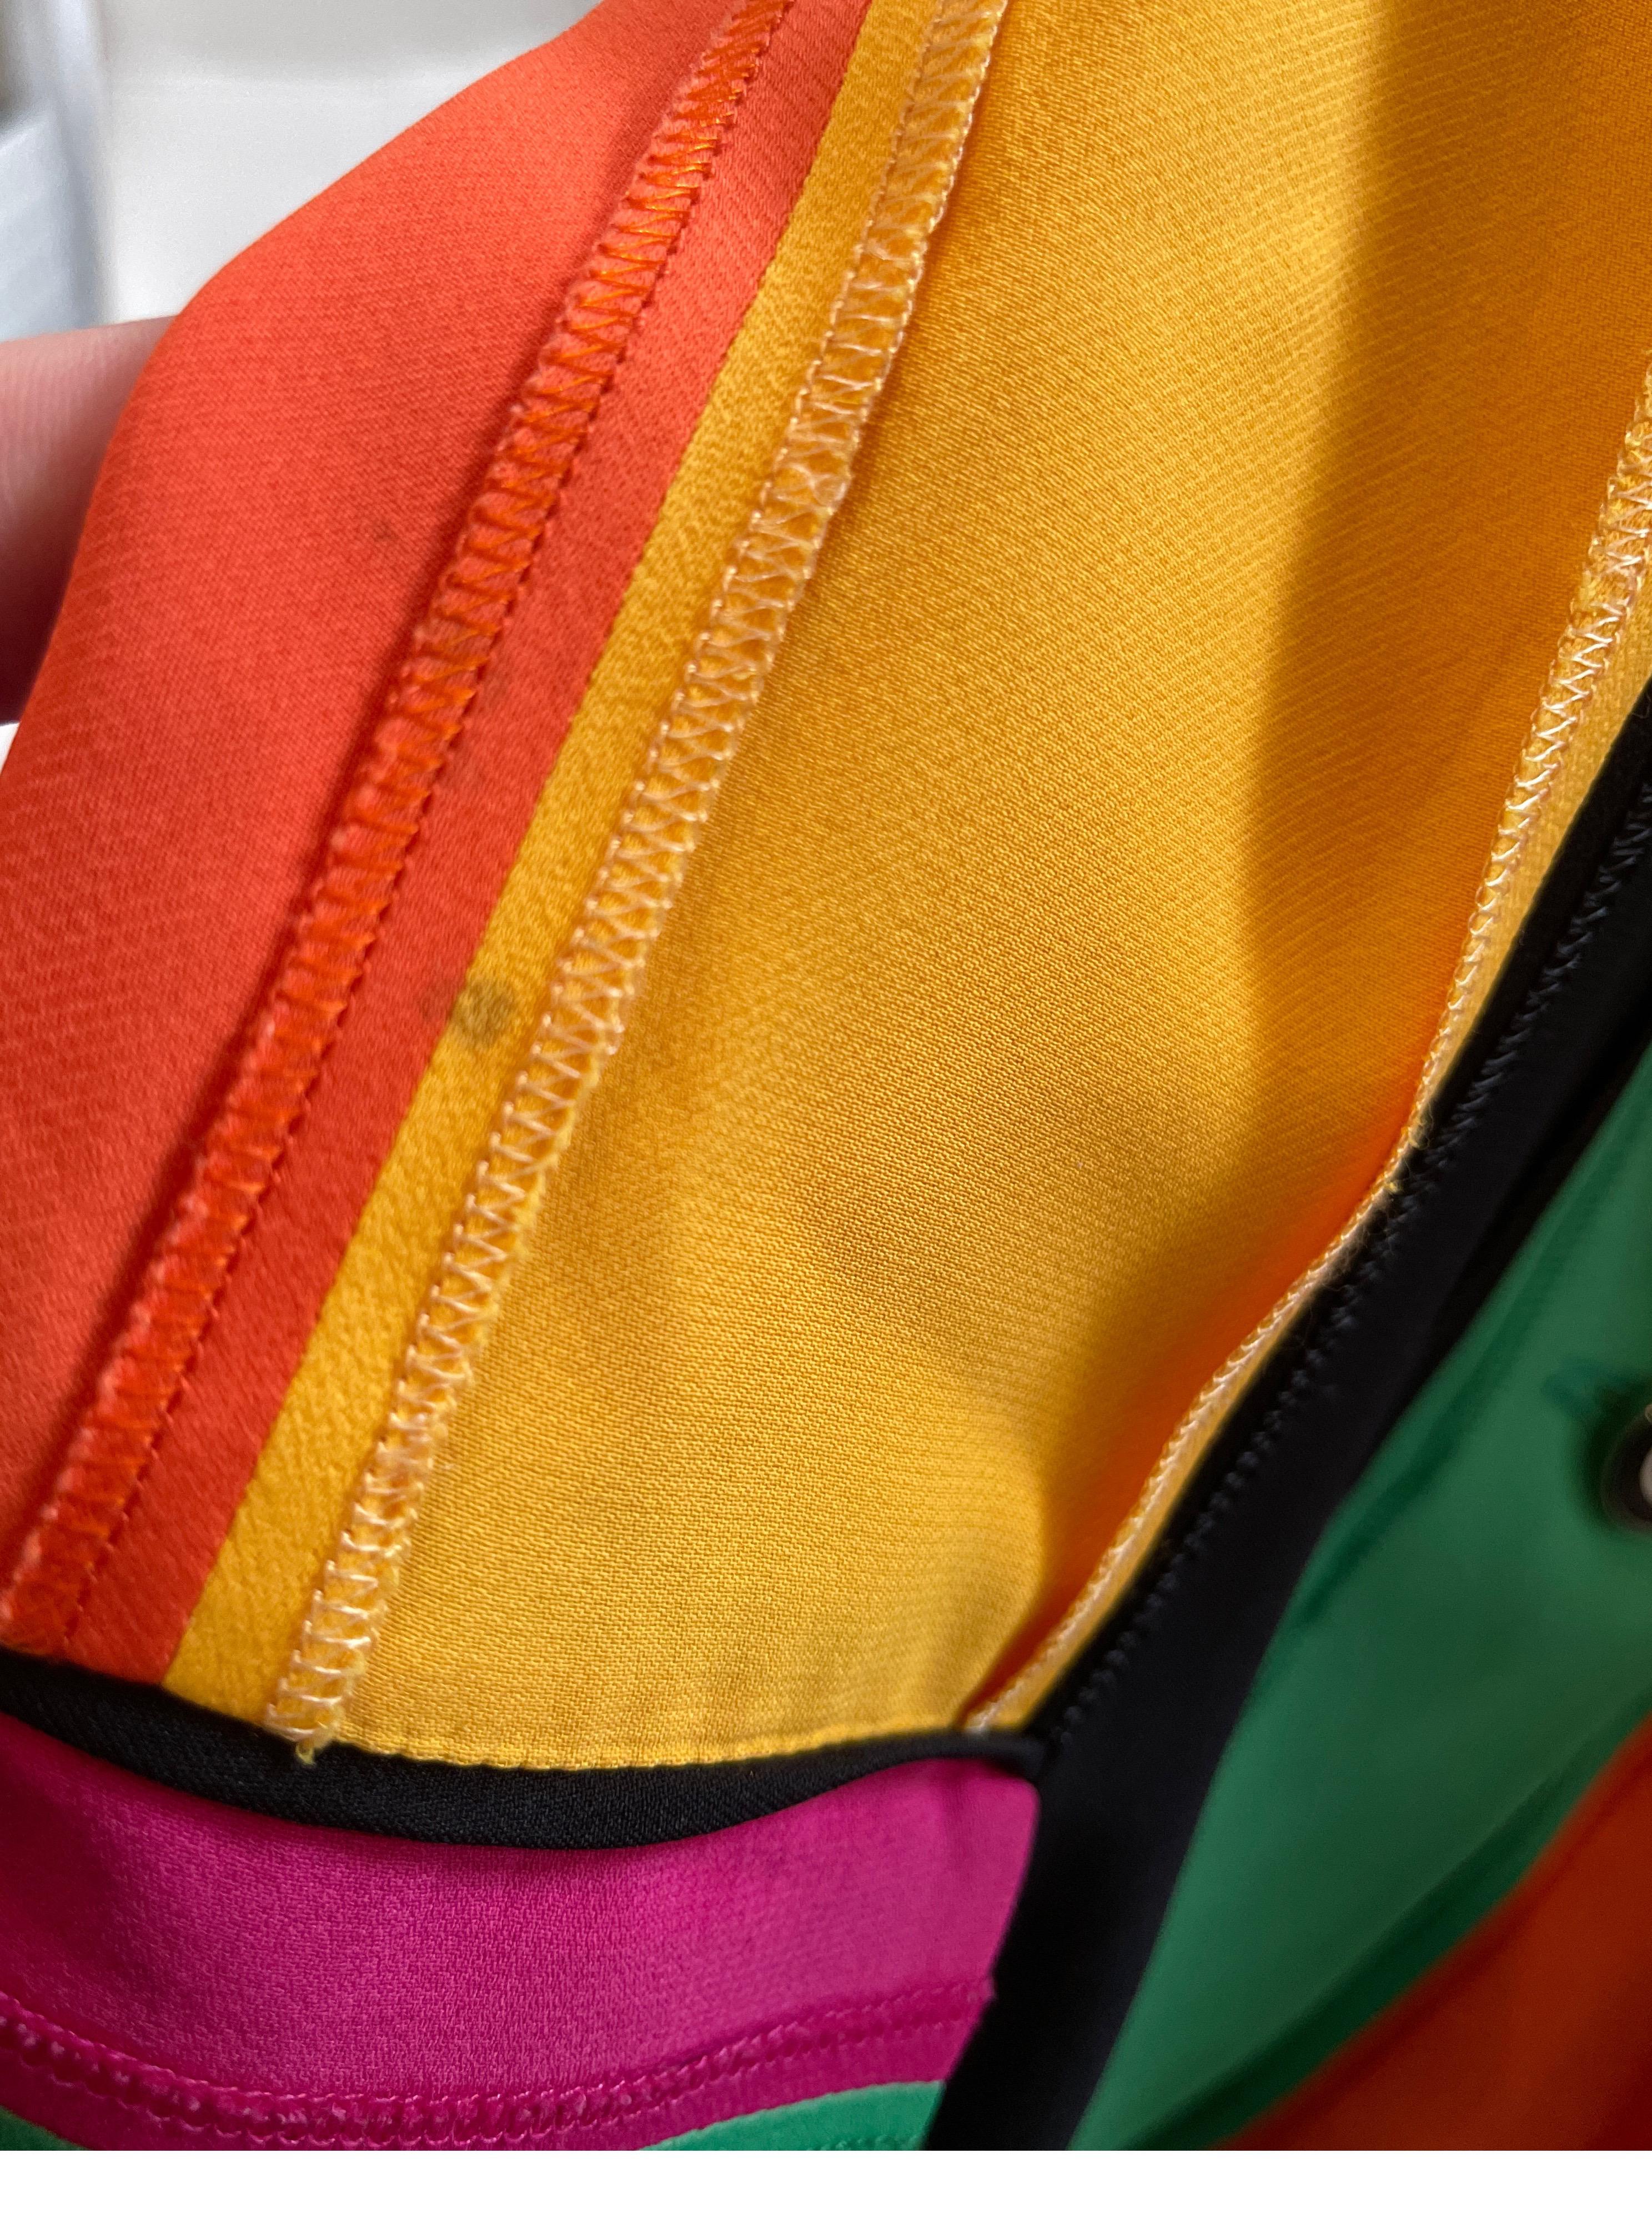 Moschino Couture Rainbow Pride Blazer For Sale 3